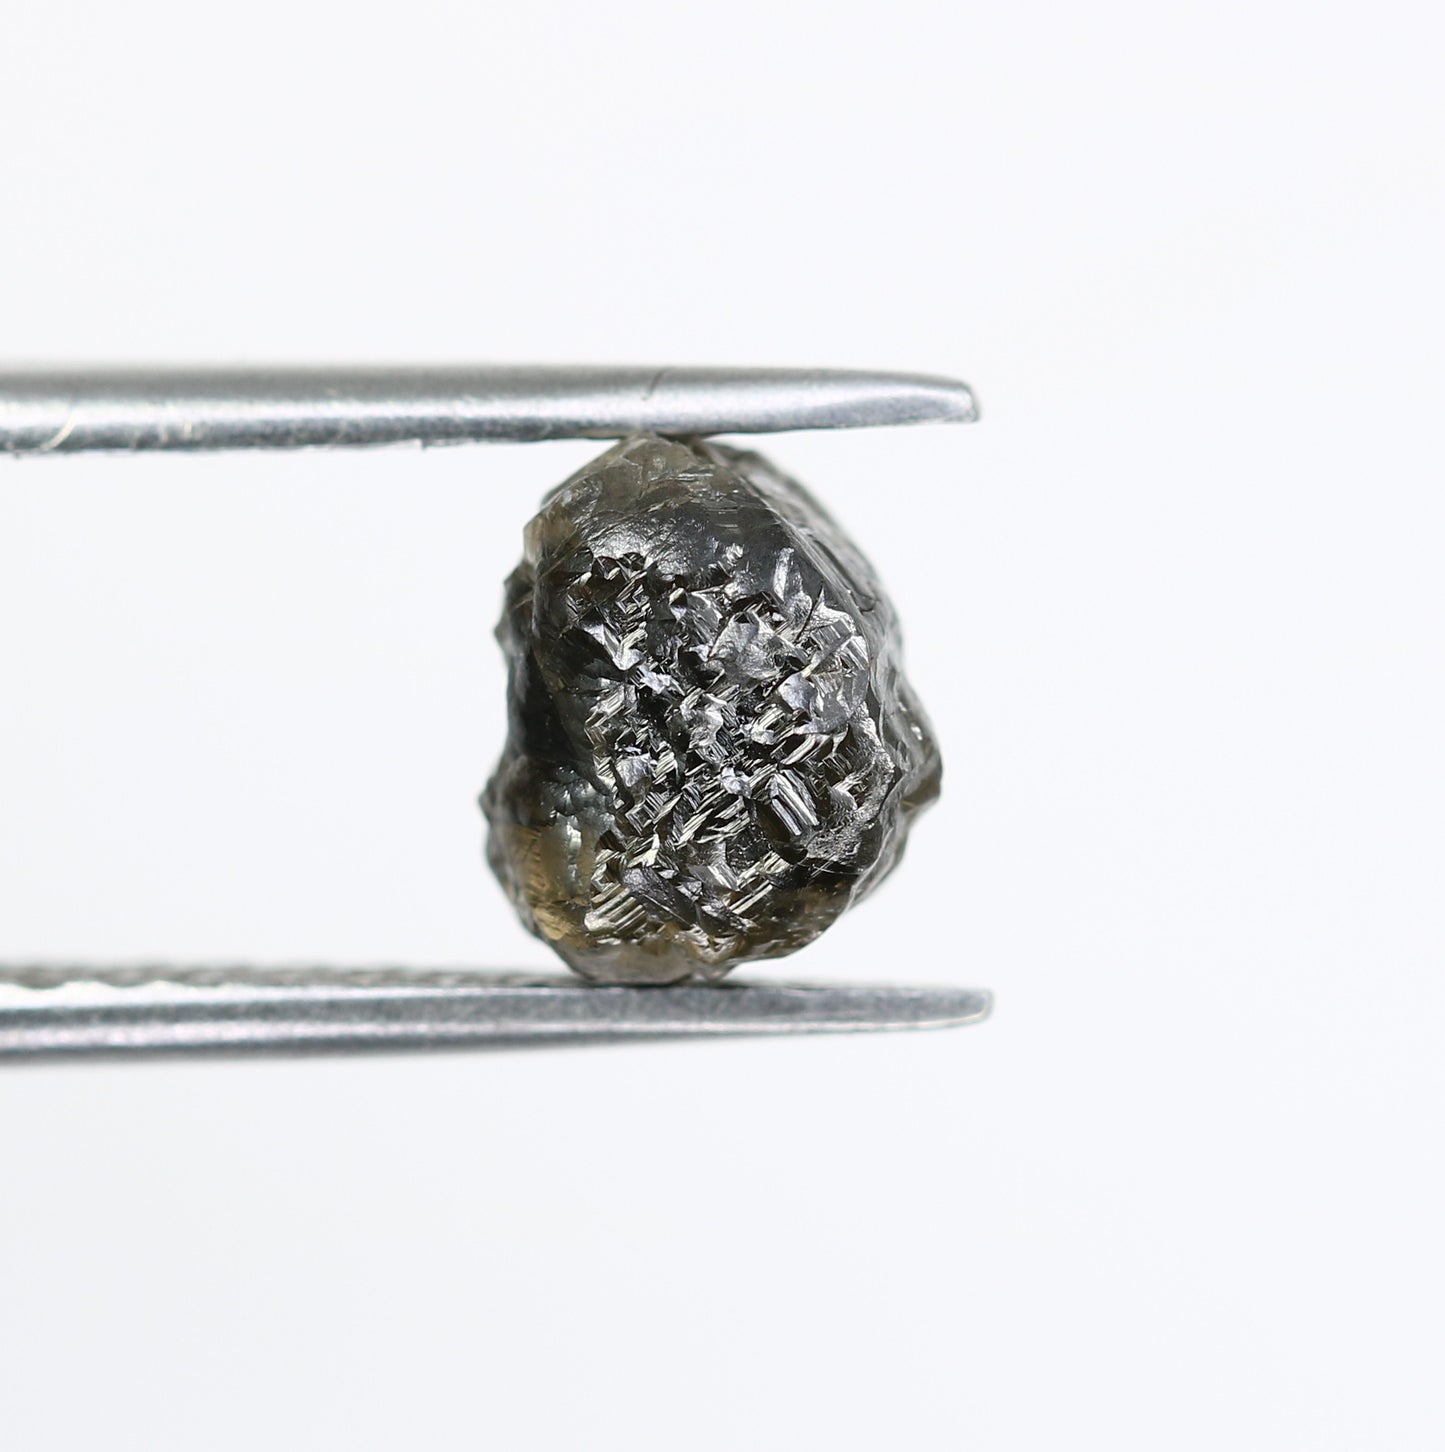 2.57 CT Rough Raw Irregular Cut Salt And Pepper Diamond For Engagement Ring